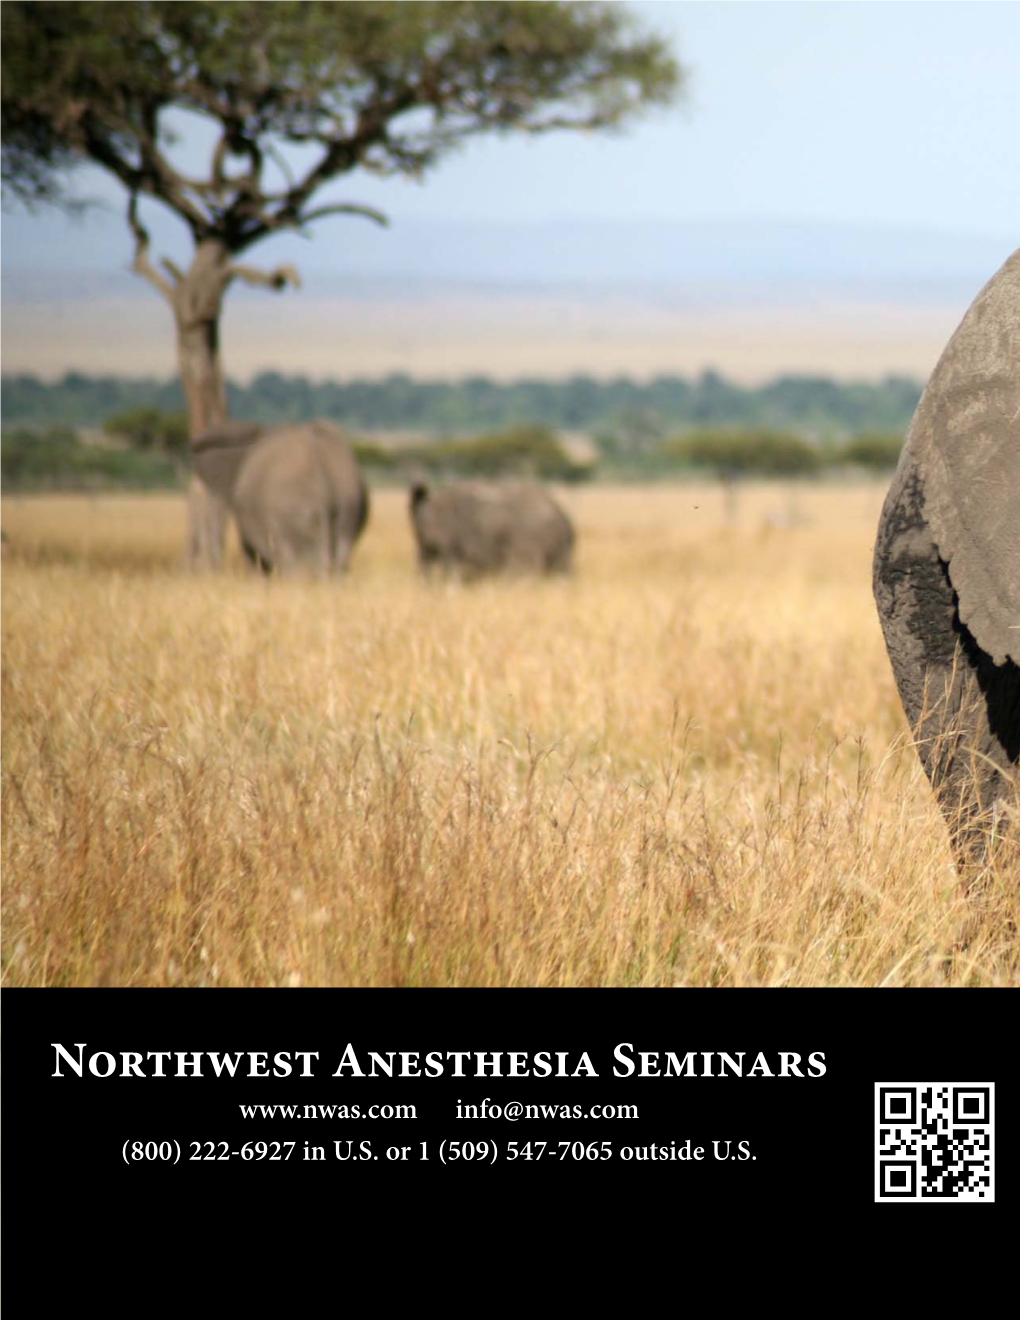 Northwest Anesthesia Seminars Info@Nwas.Com (800) 222-6927 in U.S